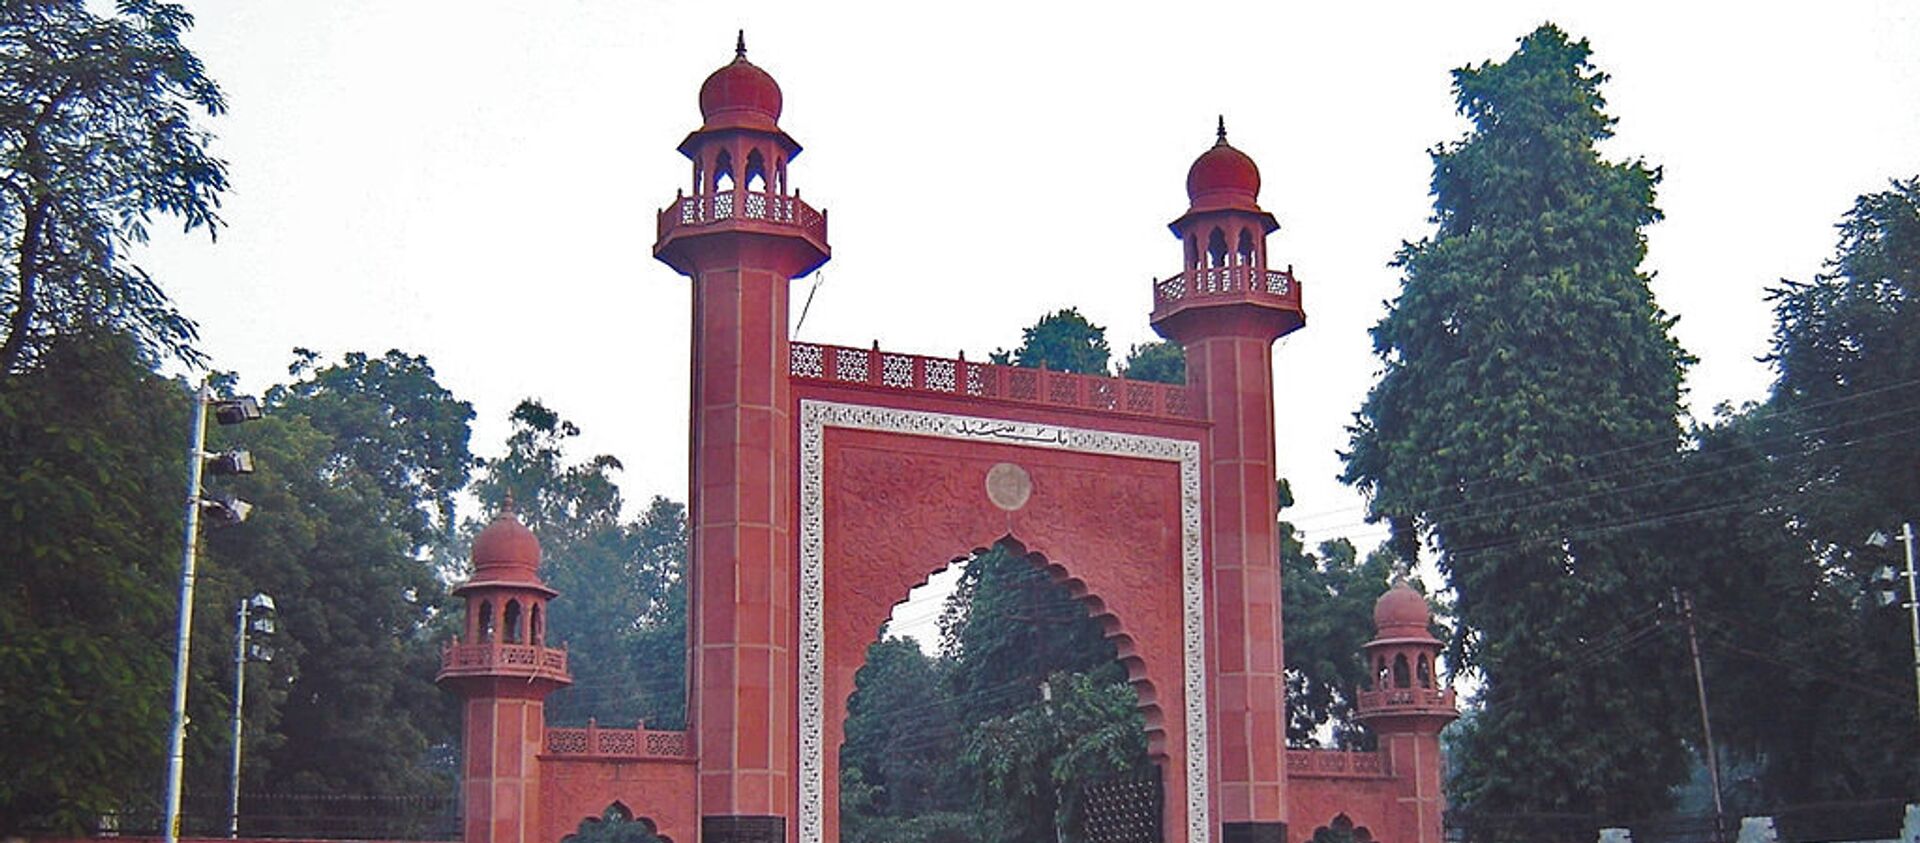  Bab-e-syed, the gateway to Aligarh Muslim University (AMU) - Sputnik International, 1920, 28.12.2019